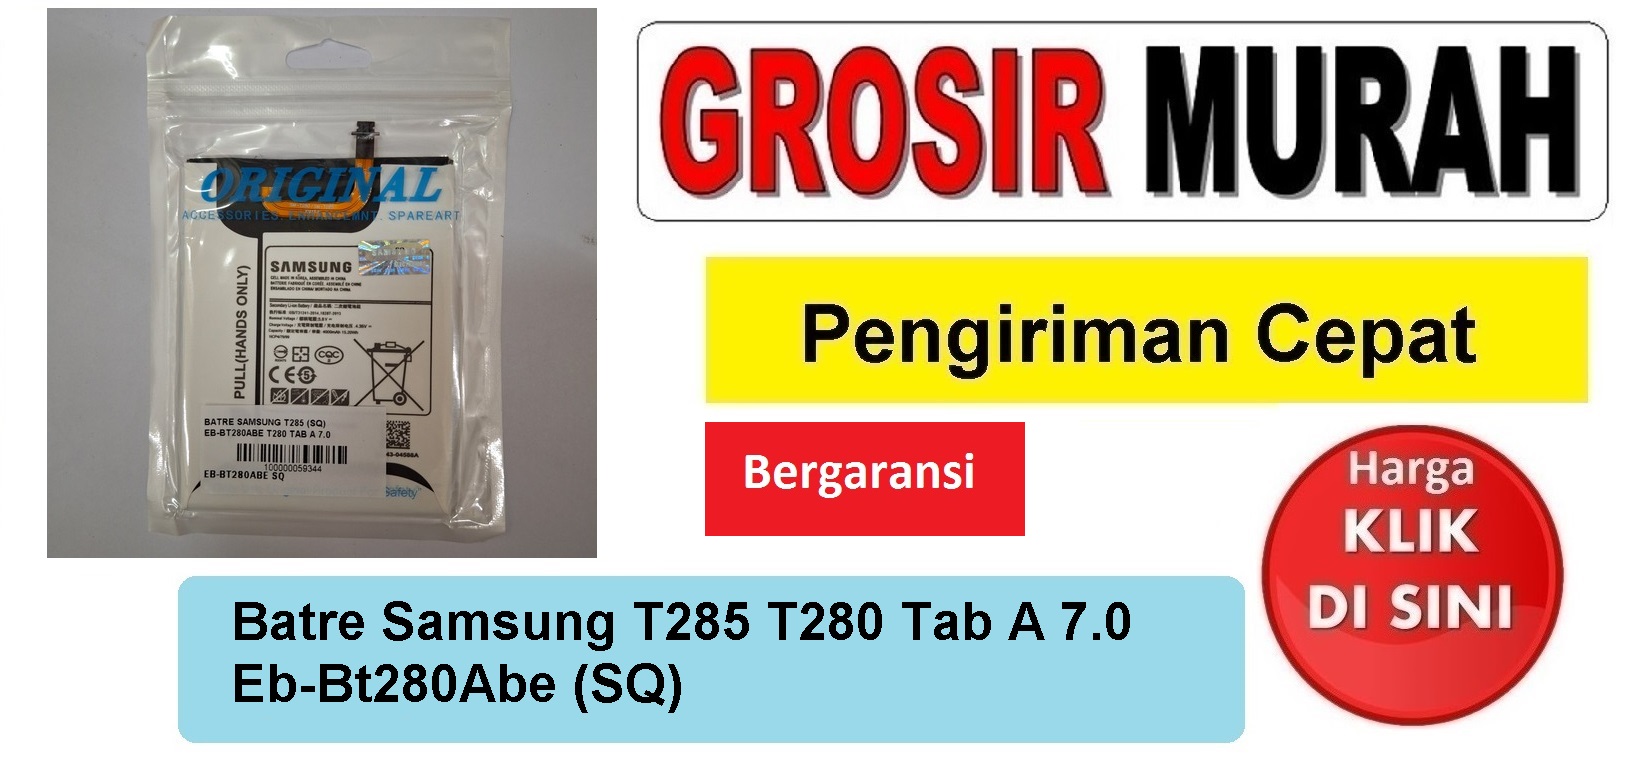 Batre Samsung T285 T280 Tab A 7.0 Eb-Bt280Abe (SQ) Baterai Battery Bergaransi Batere